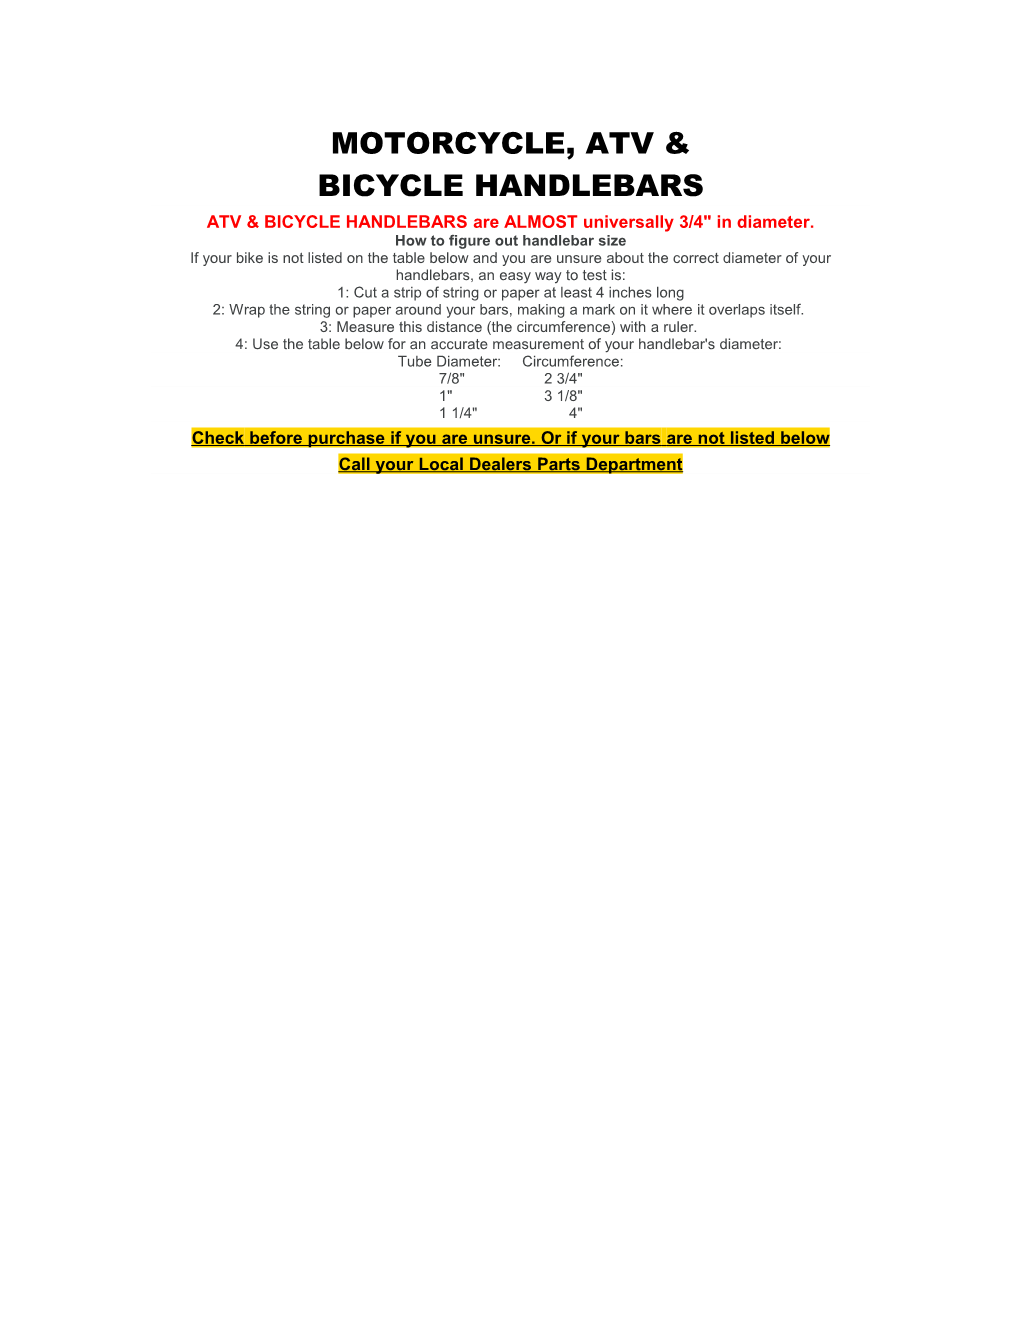 ATV & BICYCLE HANDLEBARS Are ALMOST Universally 3/4 in Diameter